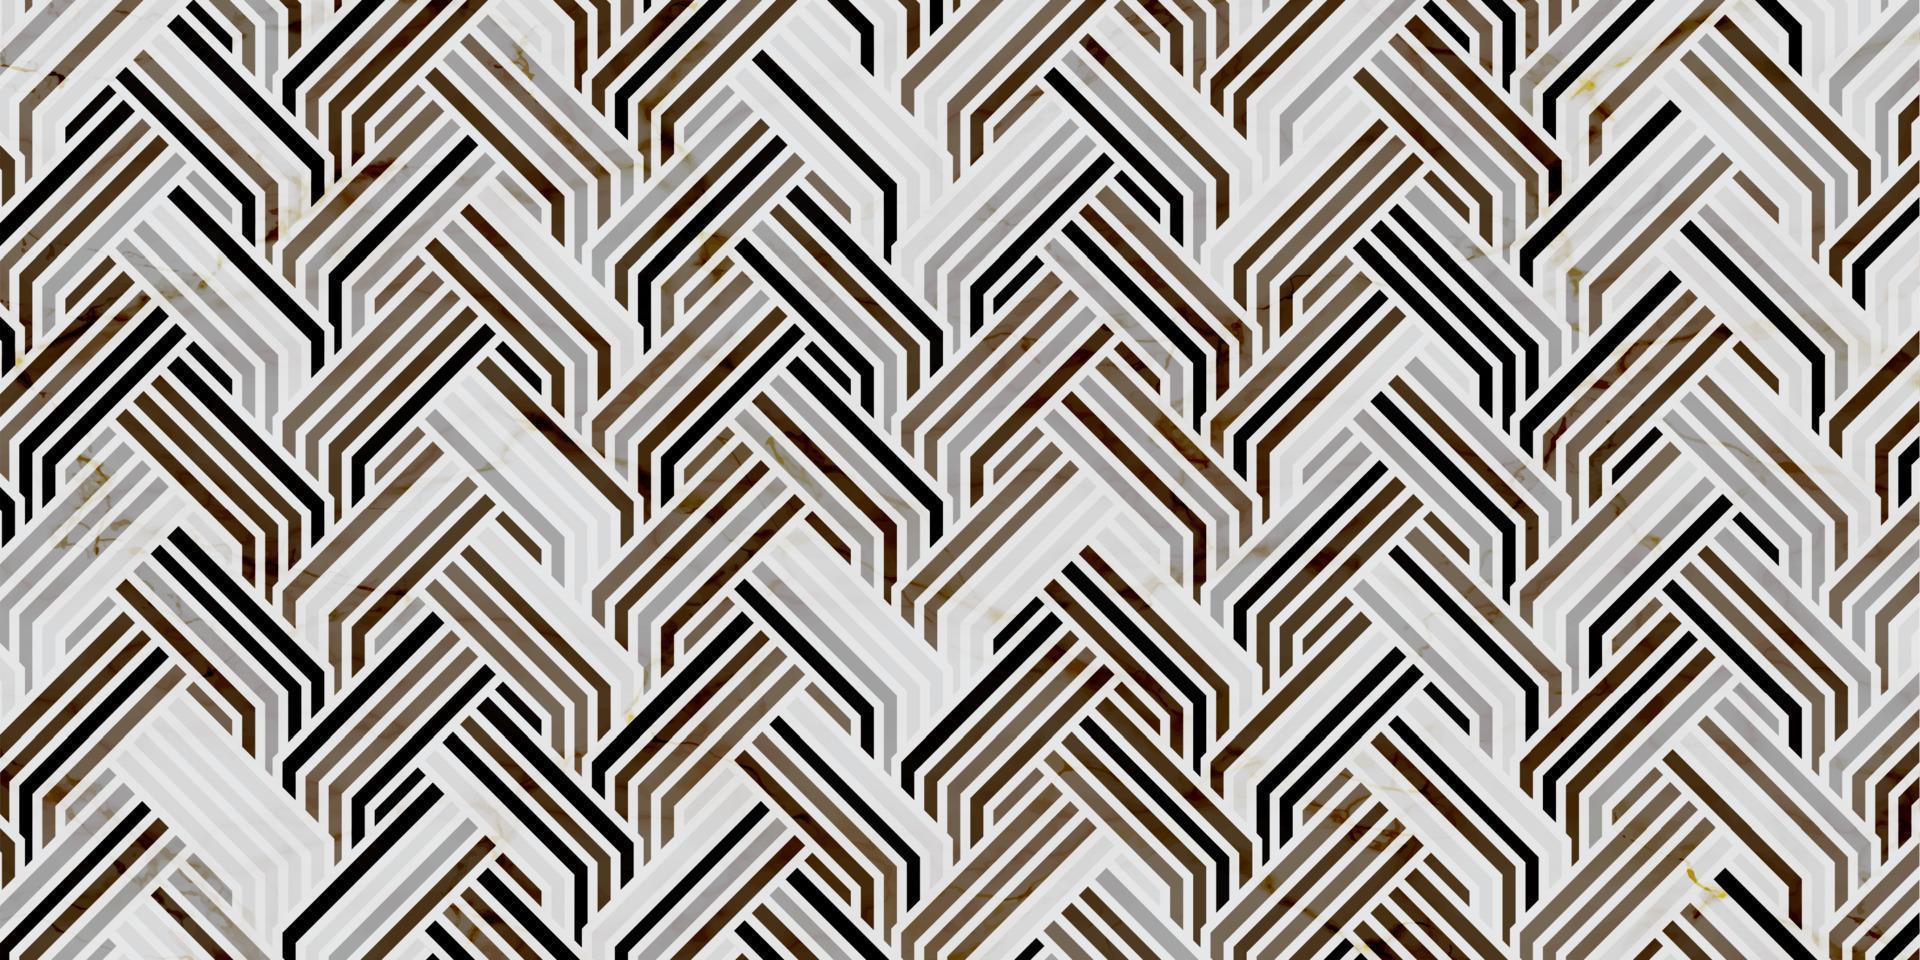 Stripes geometric pattern gray background vector